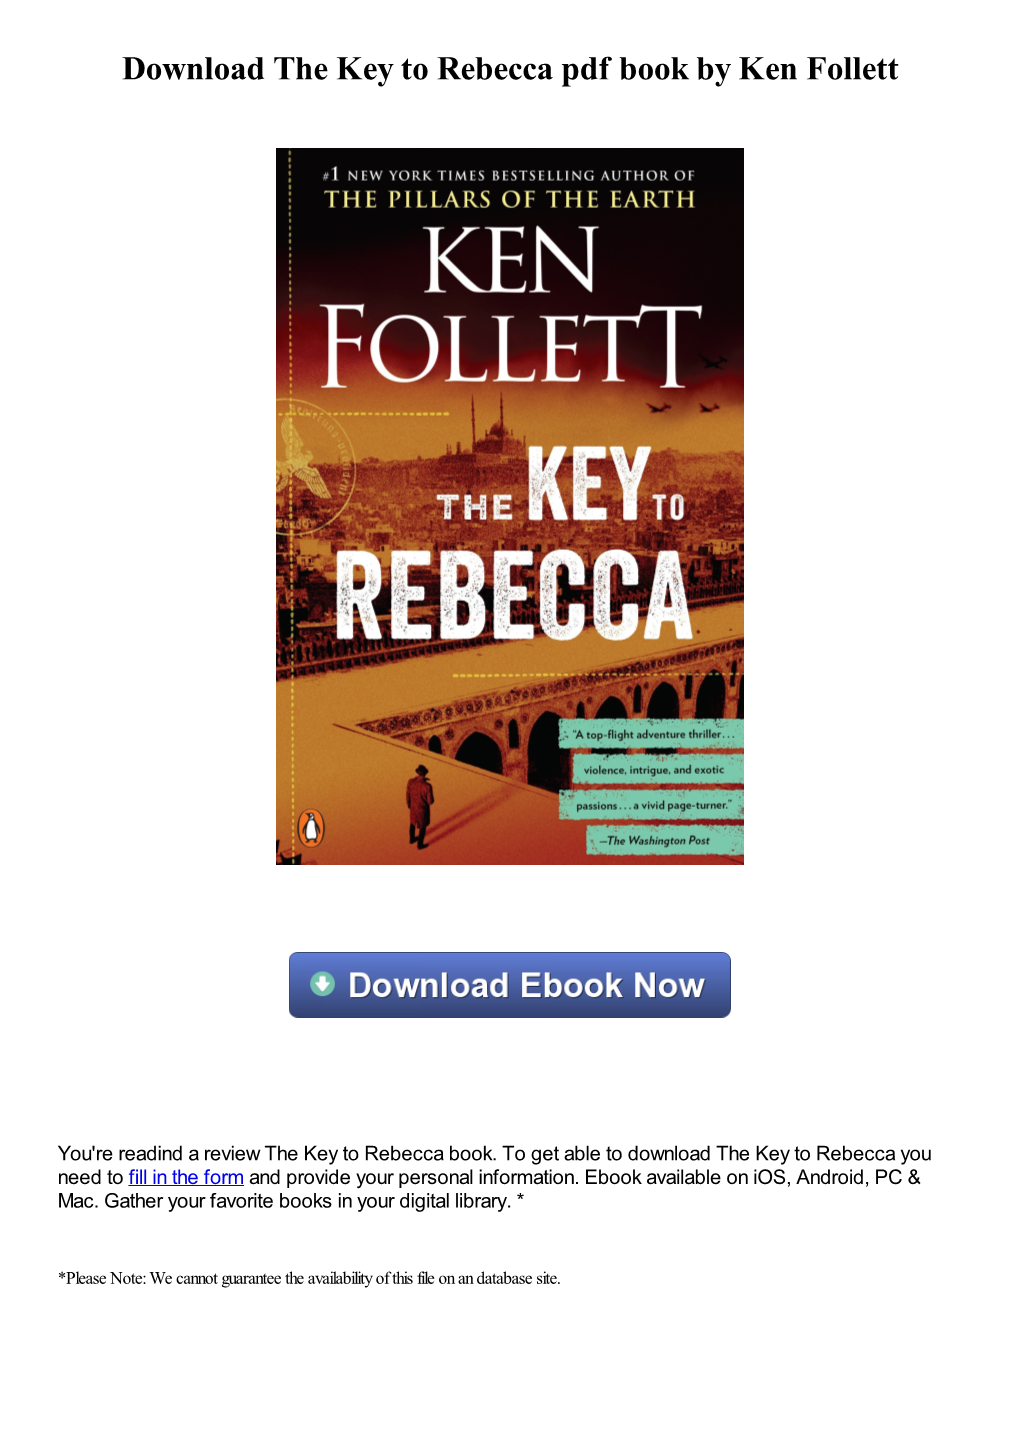 Download the Key to Rebecca Pdf Book by Ken Follett